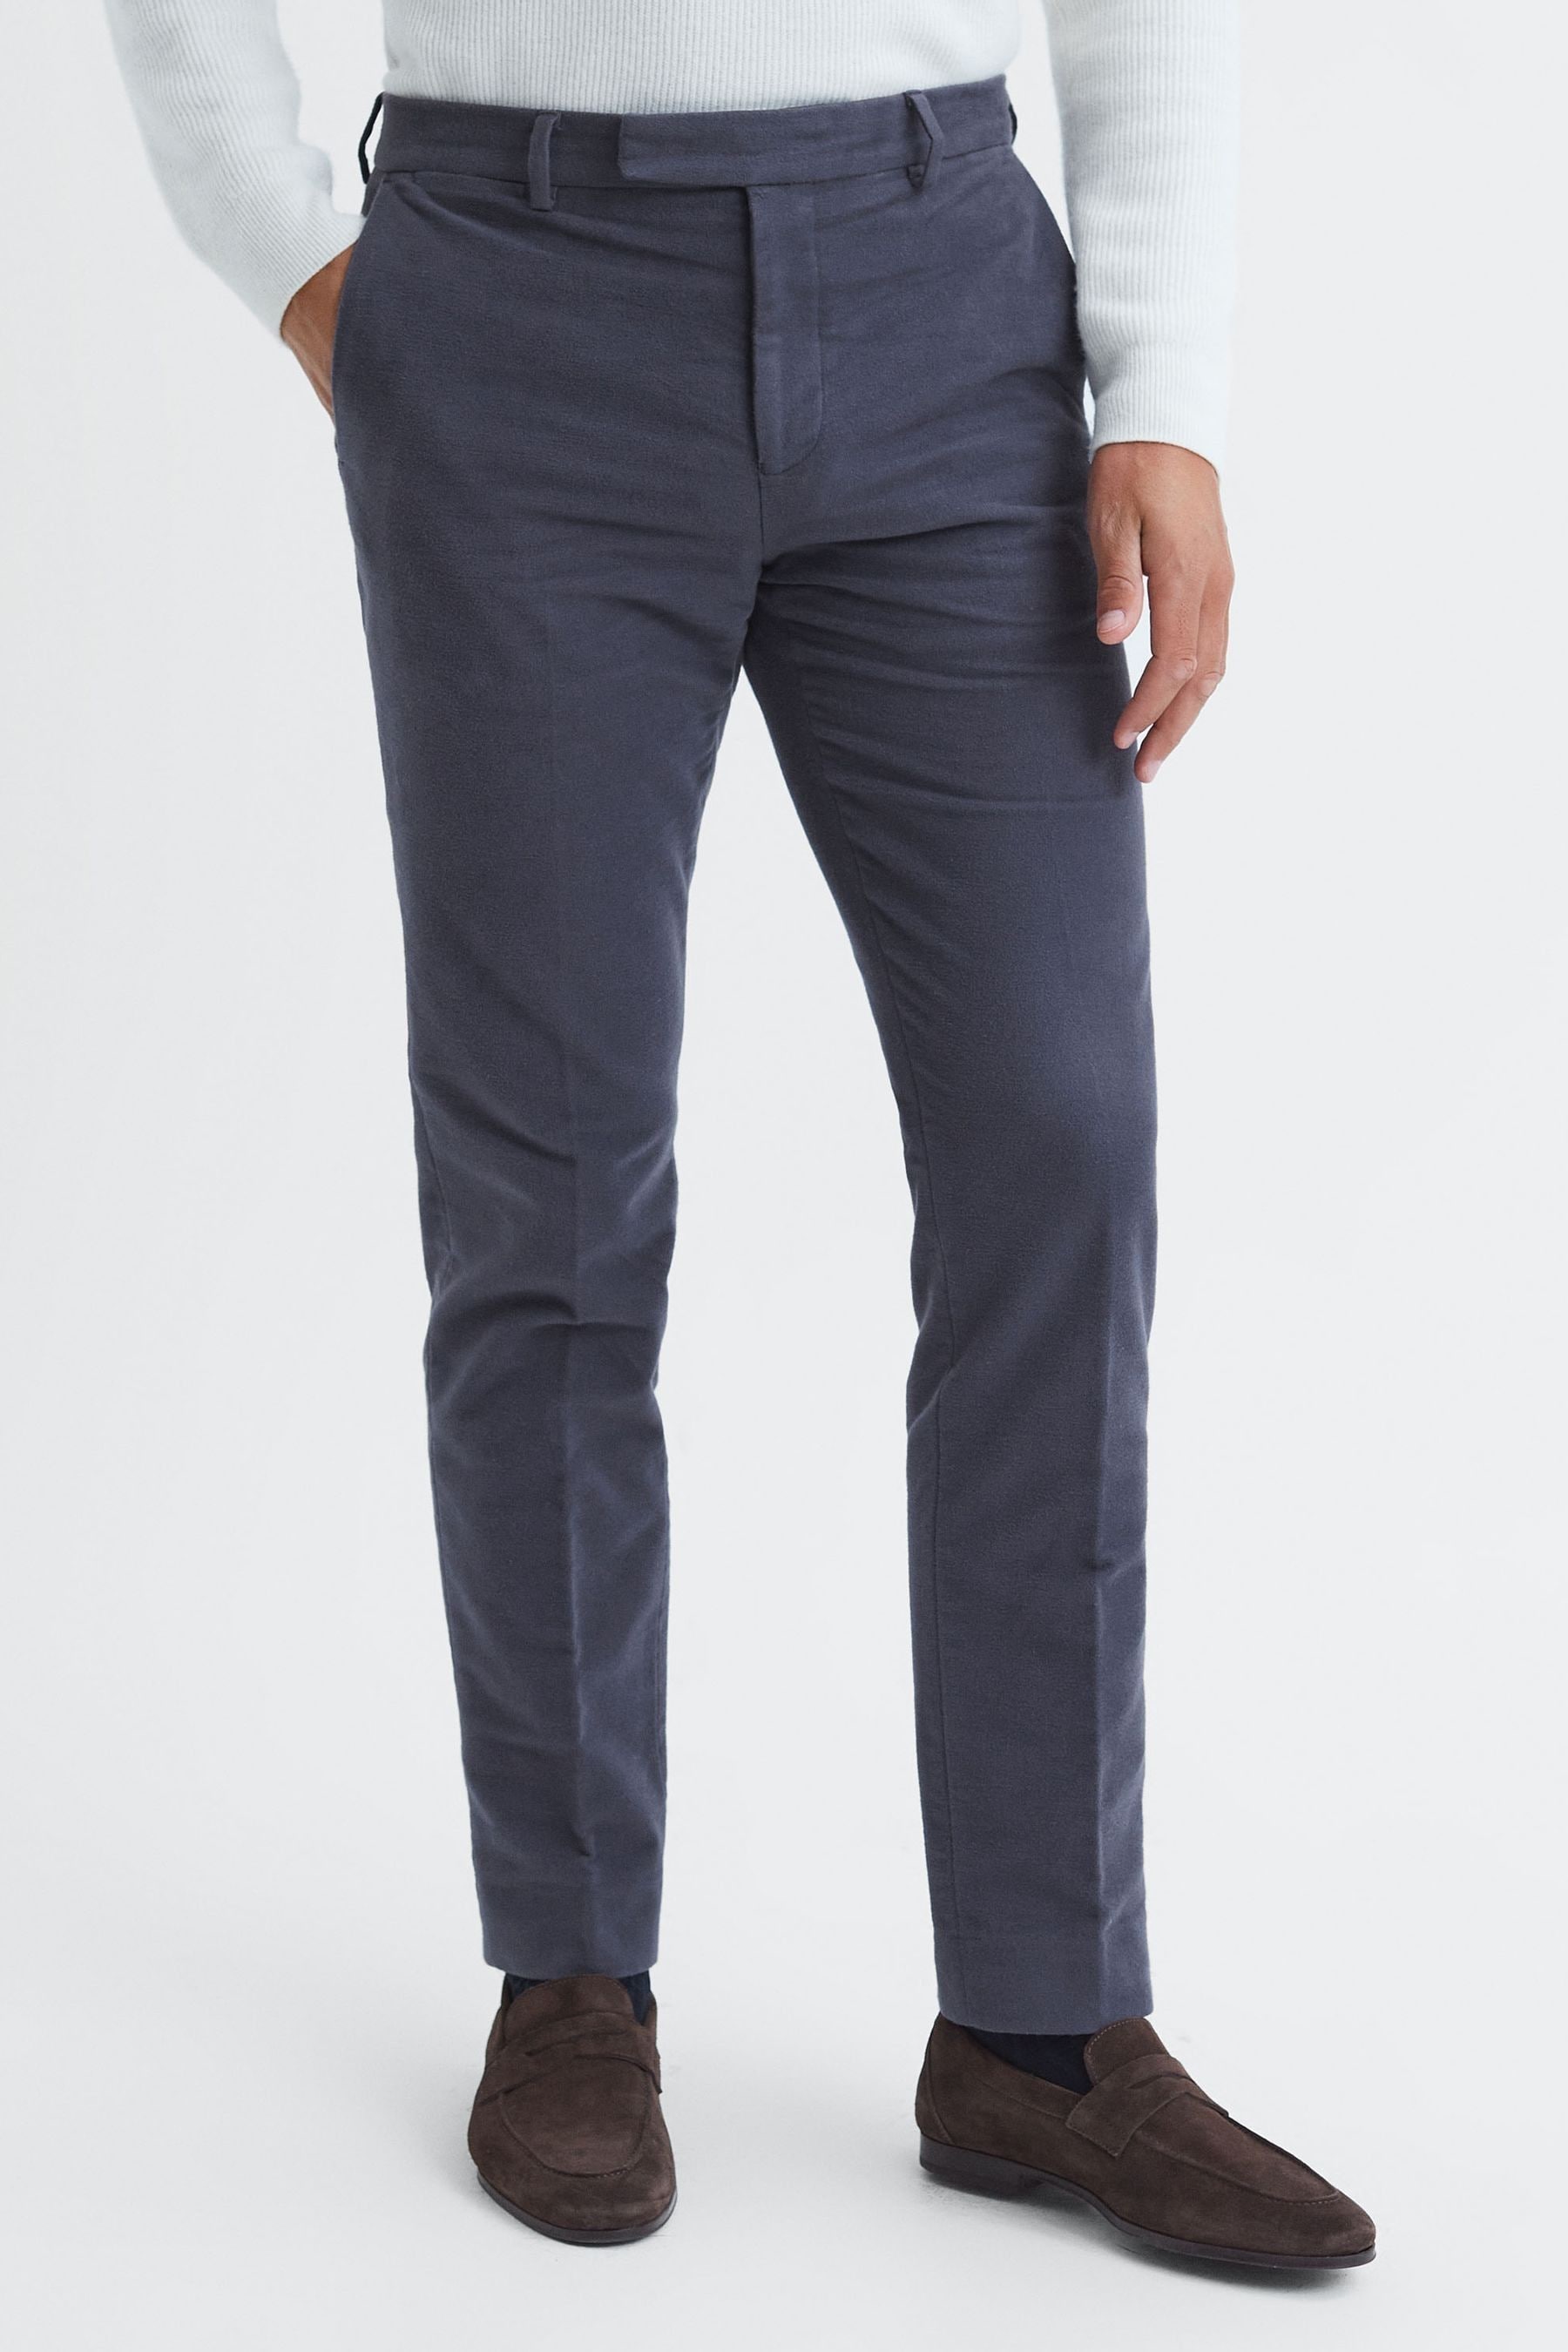 Reiss Spark - Airforce Blue Slim Fit Moleskin Trousers, 28